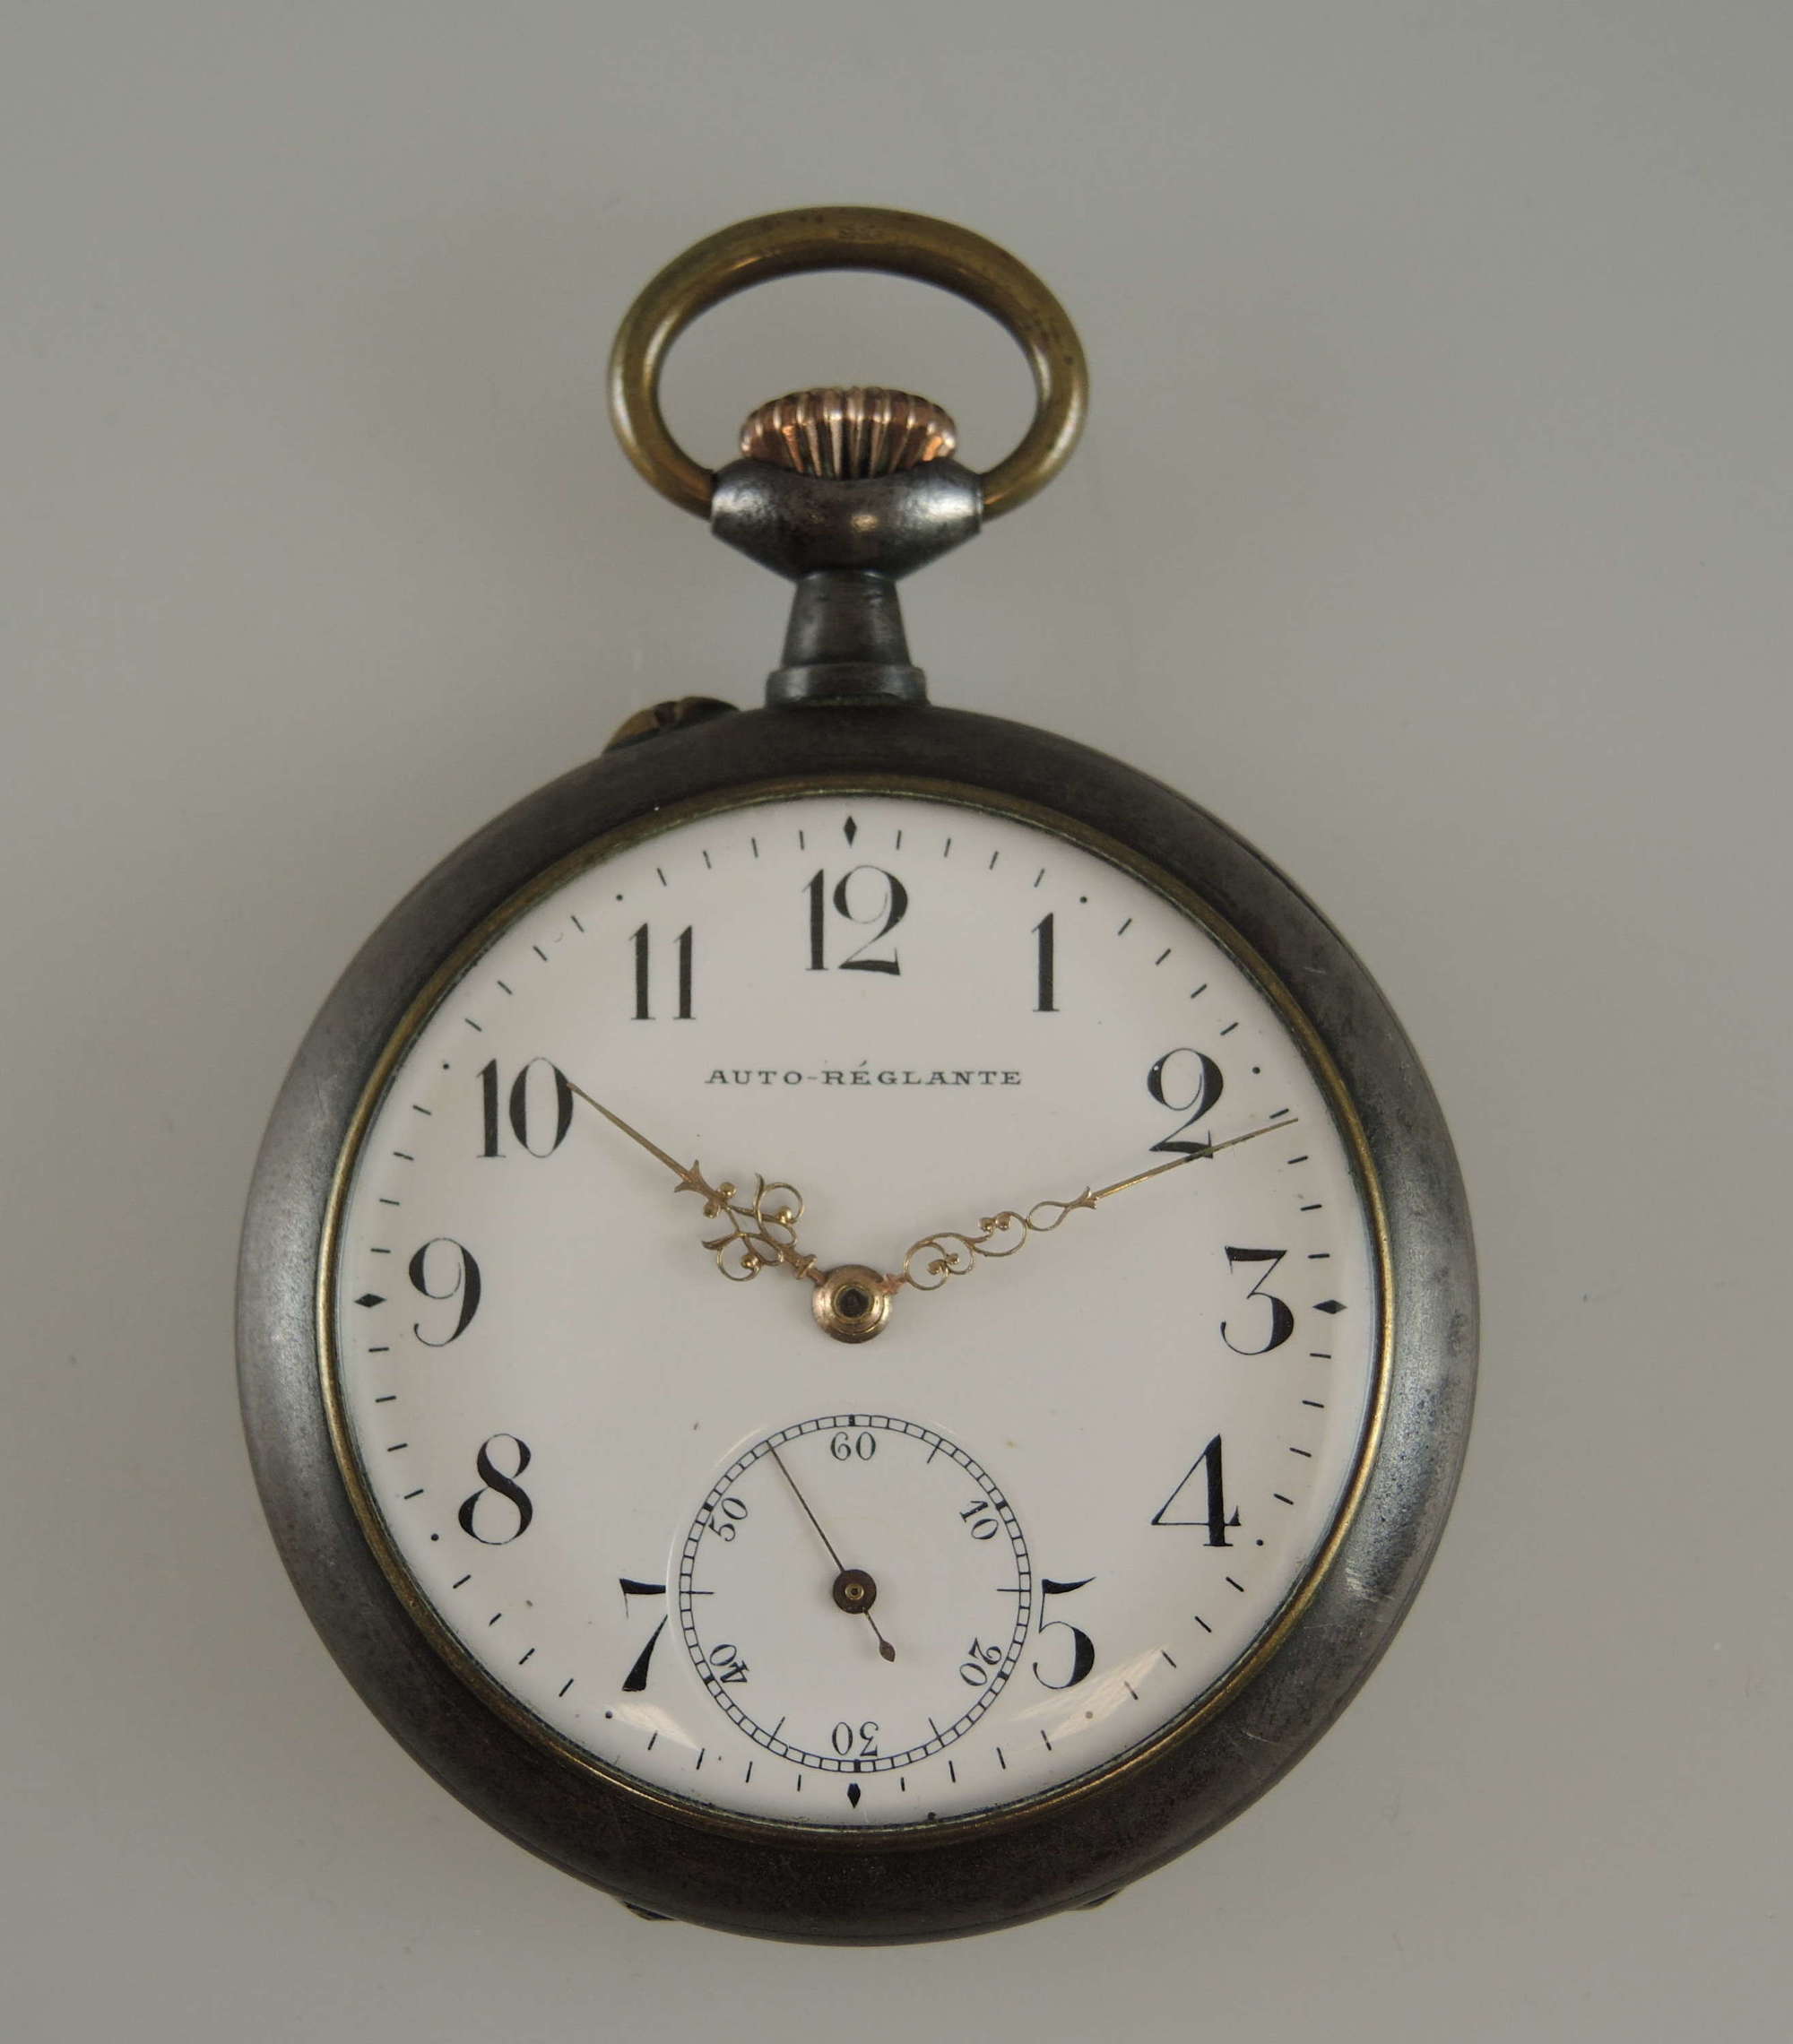 Vintage gunmetal pocket watch with an unusual patent regulator c1890